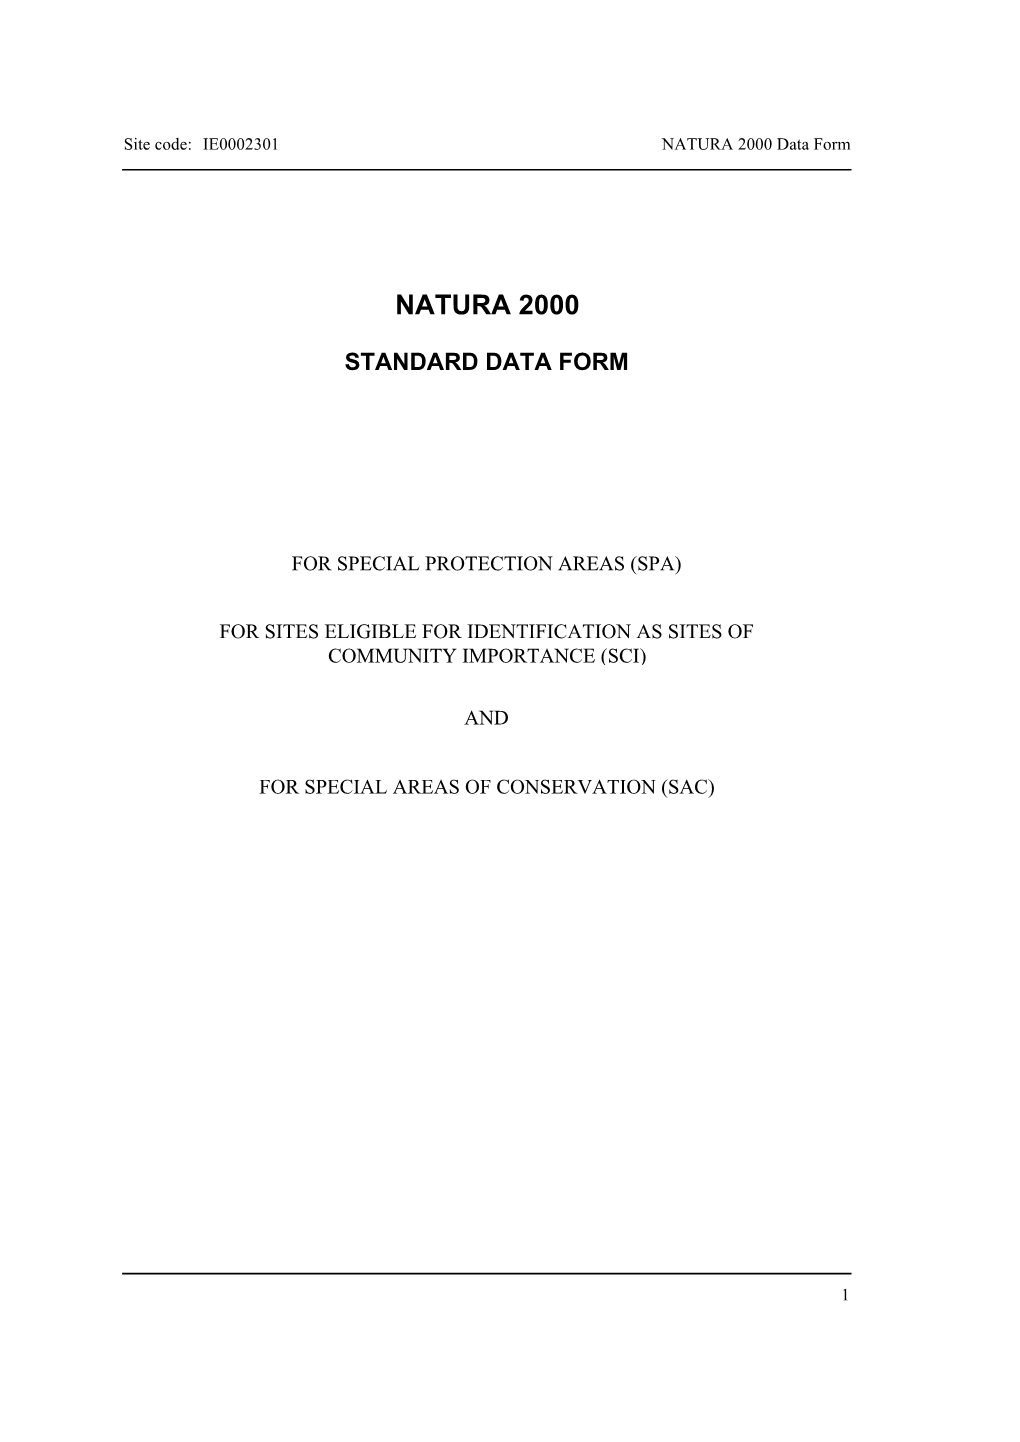 NATURA 2000 Data Form